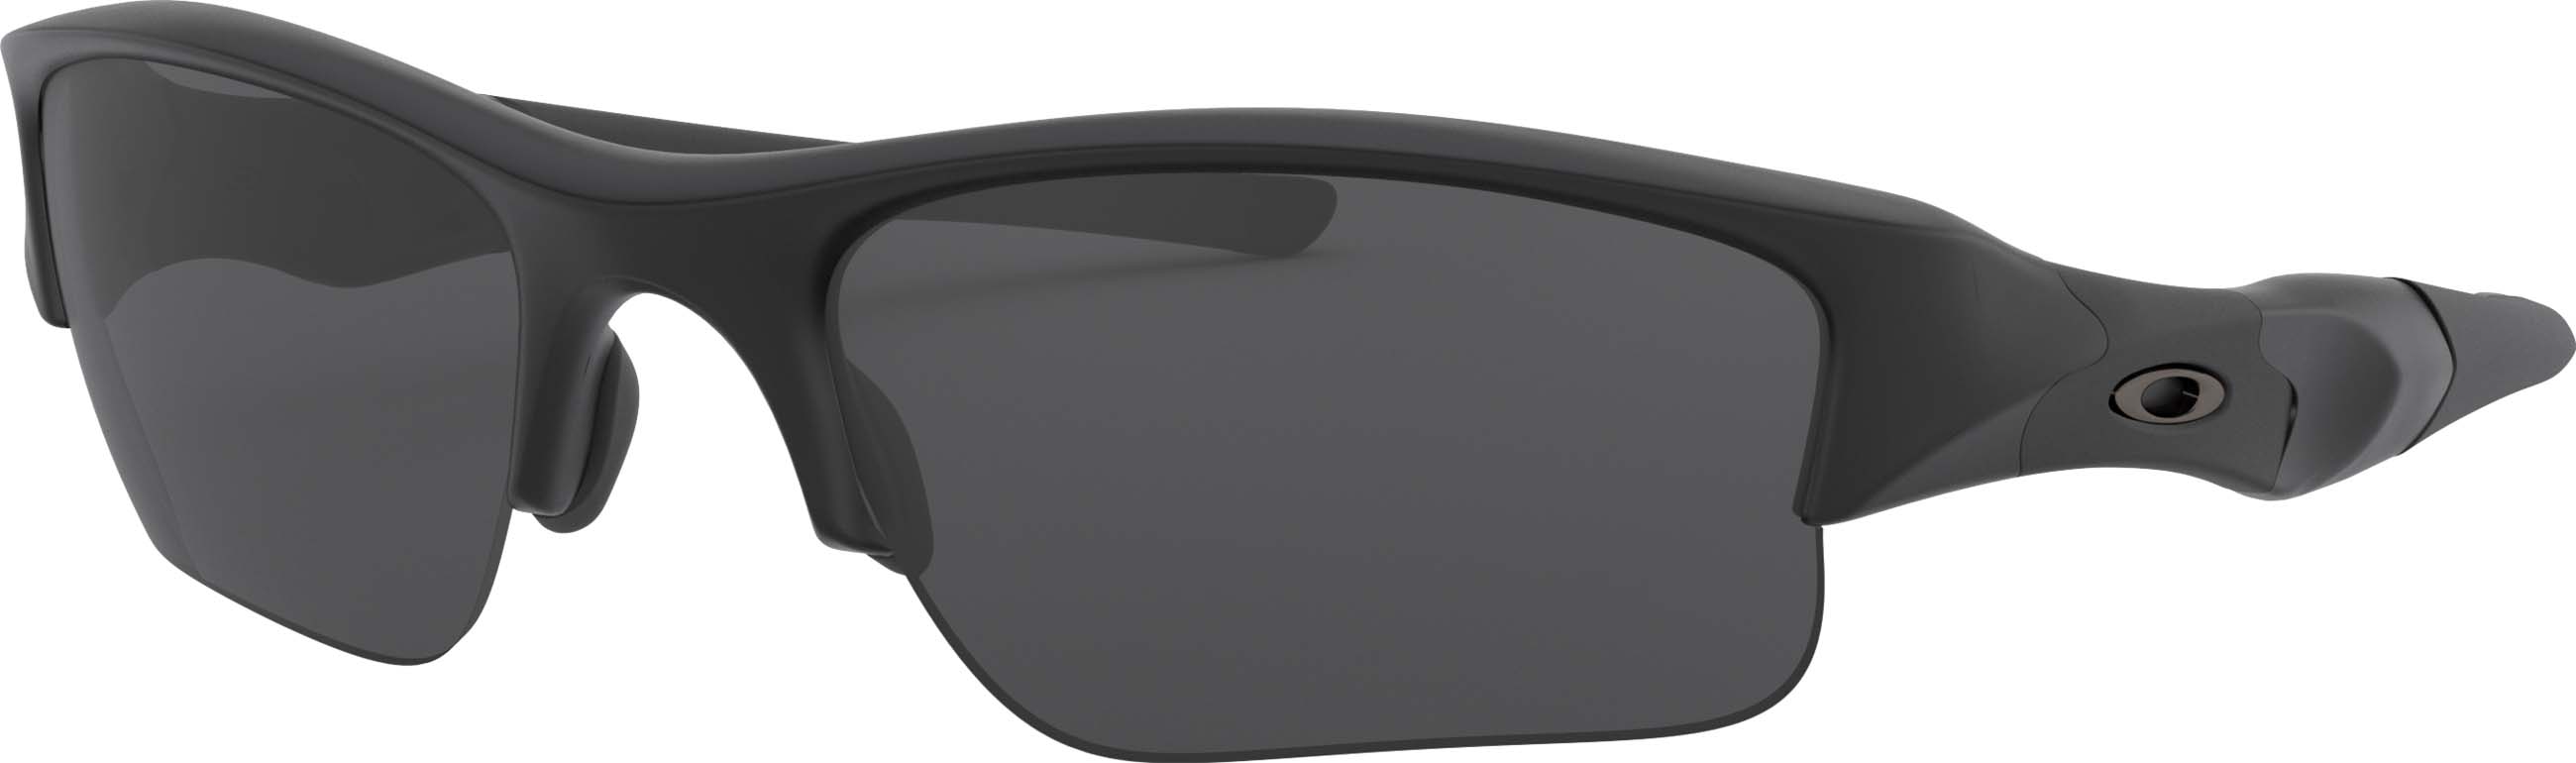 Oakley SI Flak Jacket XLJ Sunglasses w/ Interchangeable Lenses  Star  Rating w/ Free S&H